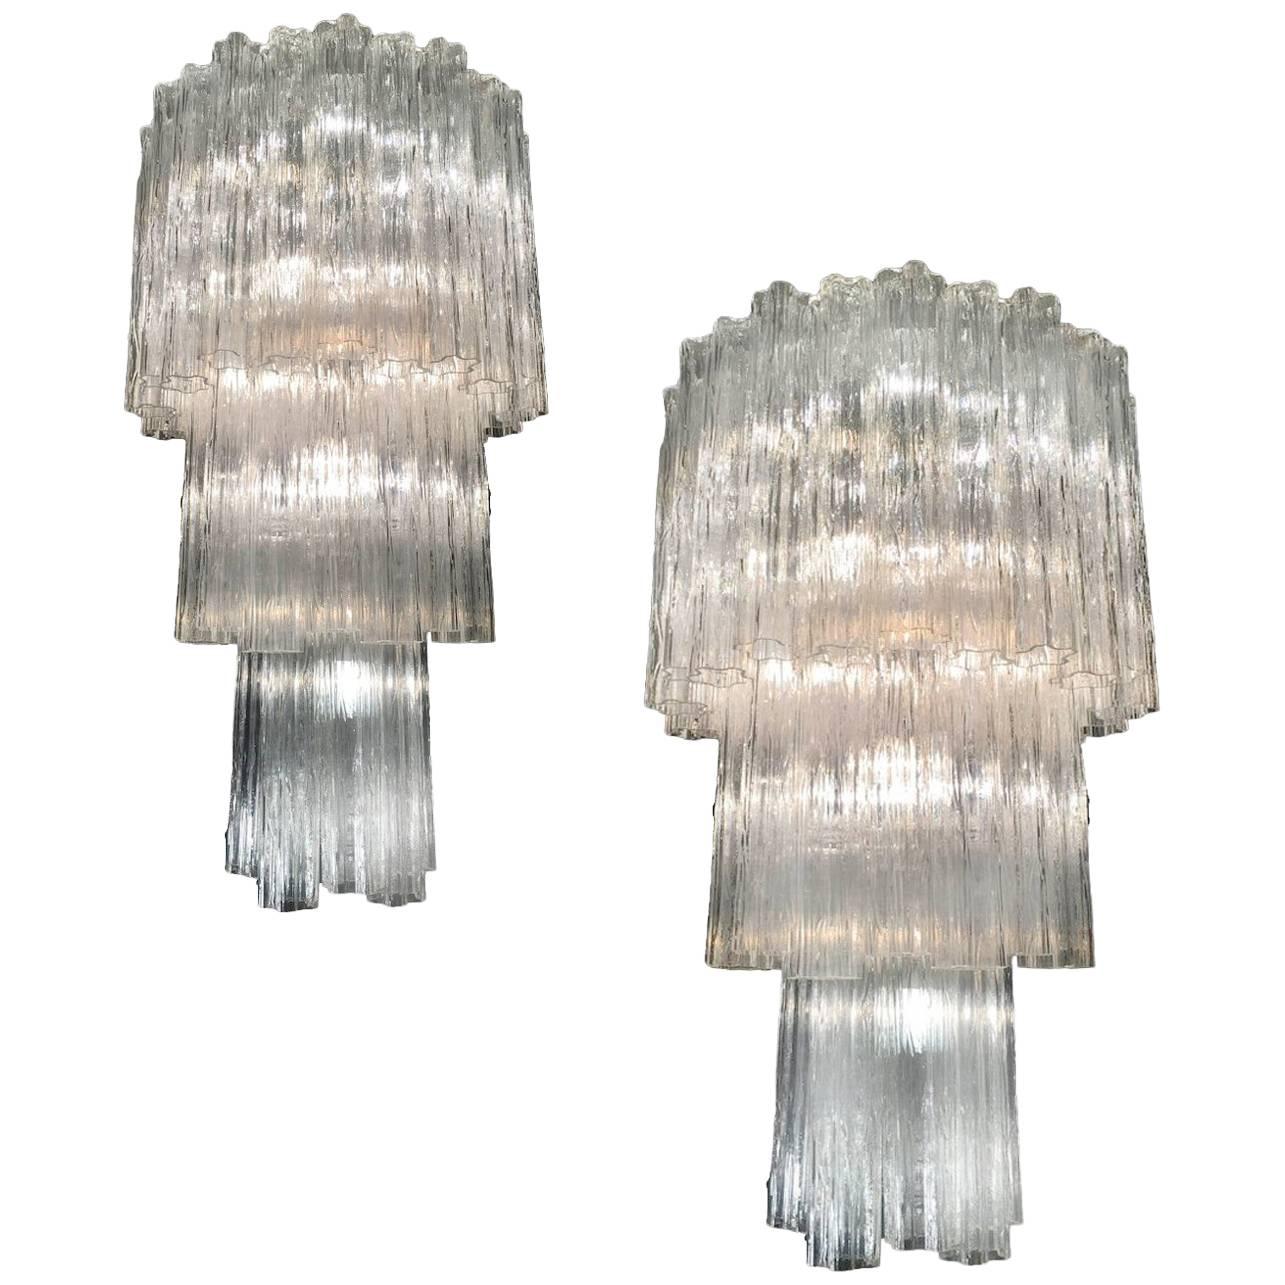 The chandelier include precious 48 tronchi Murano glass 45 has cm long. Measures: Diameter 60 cm, height 110 cm. 16 lights.